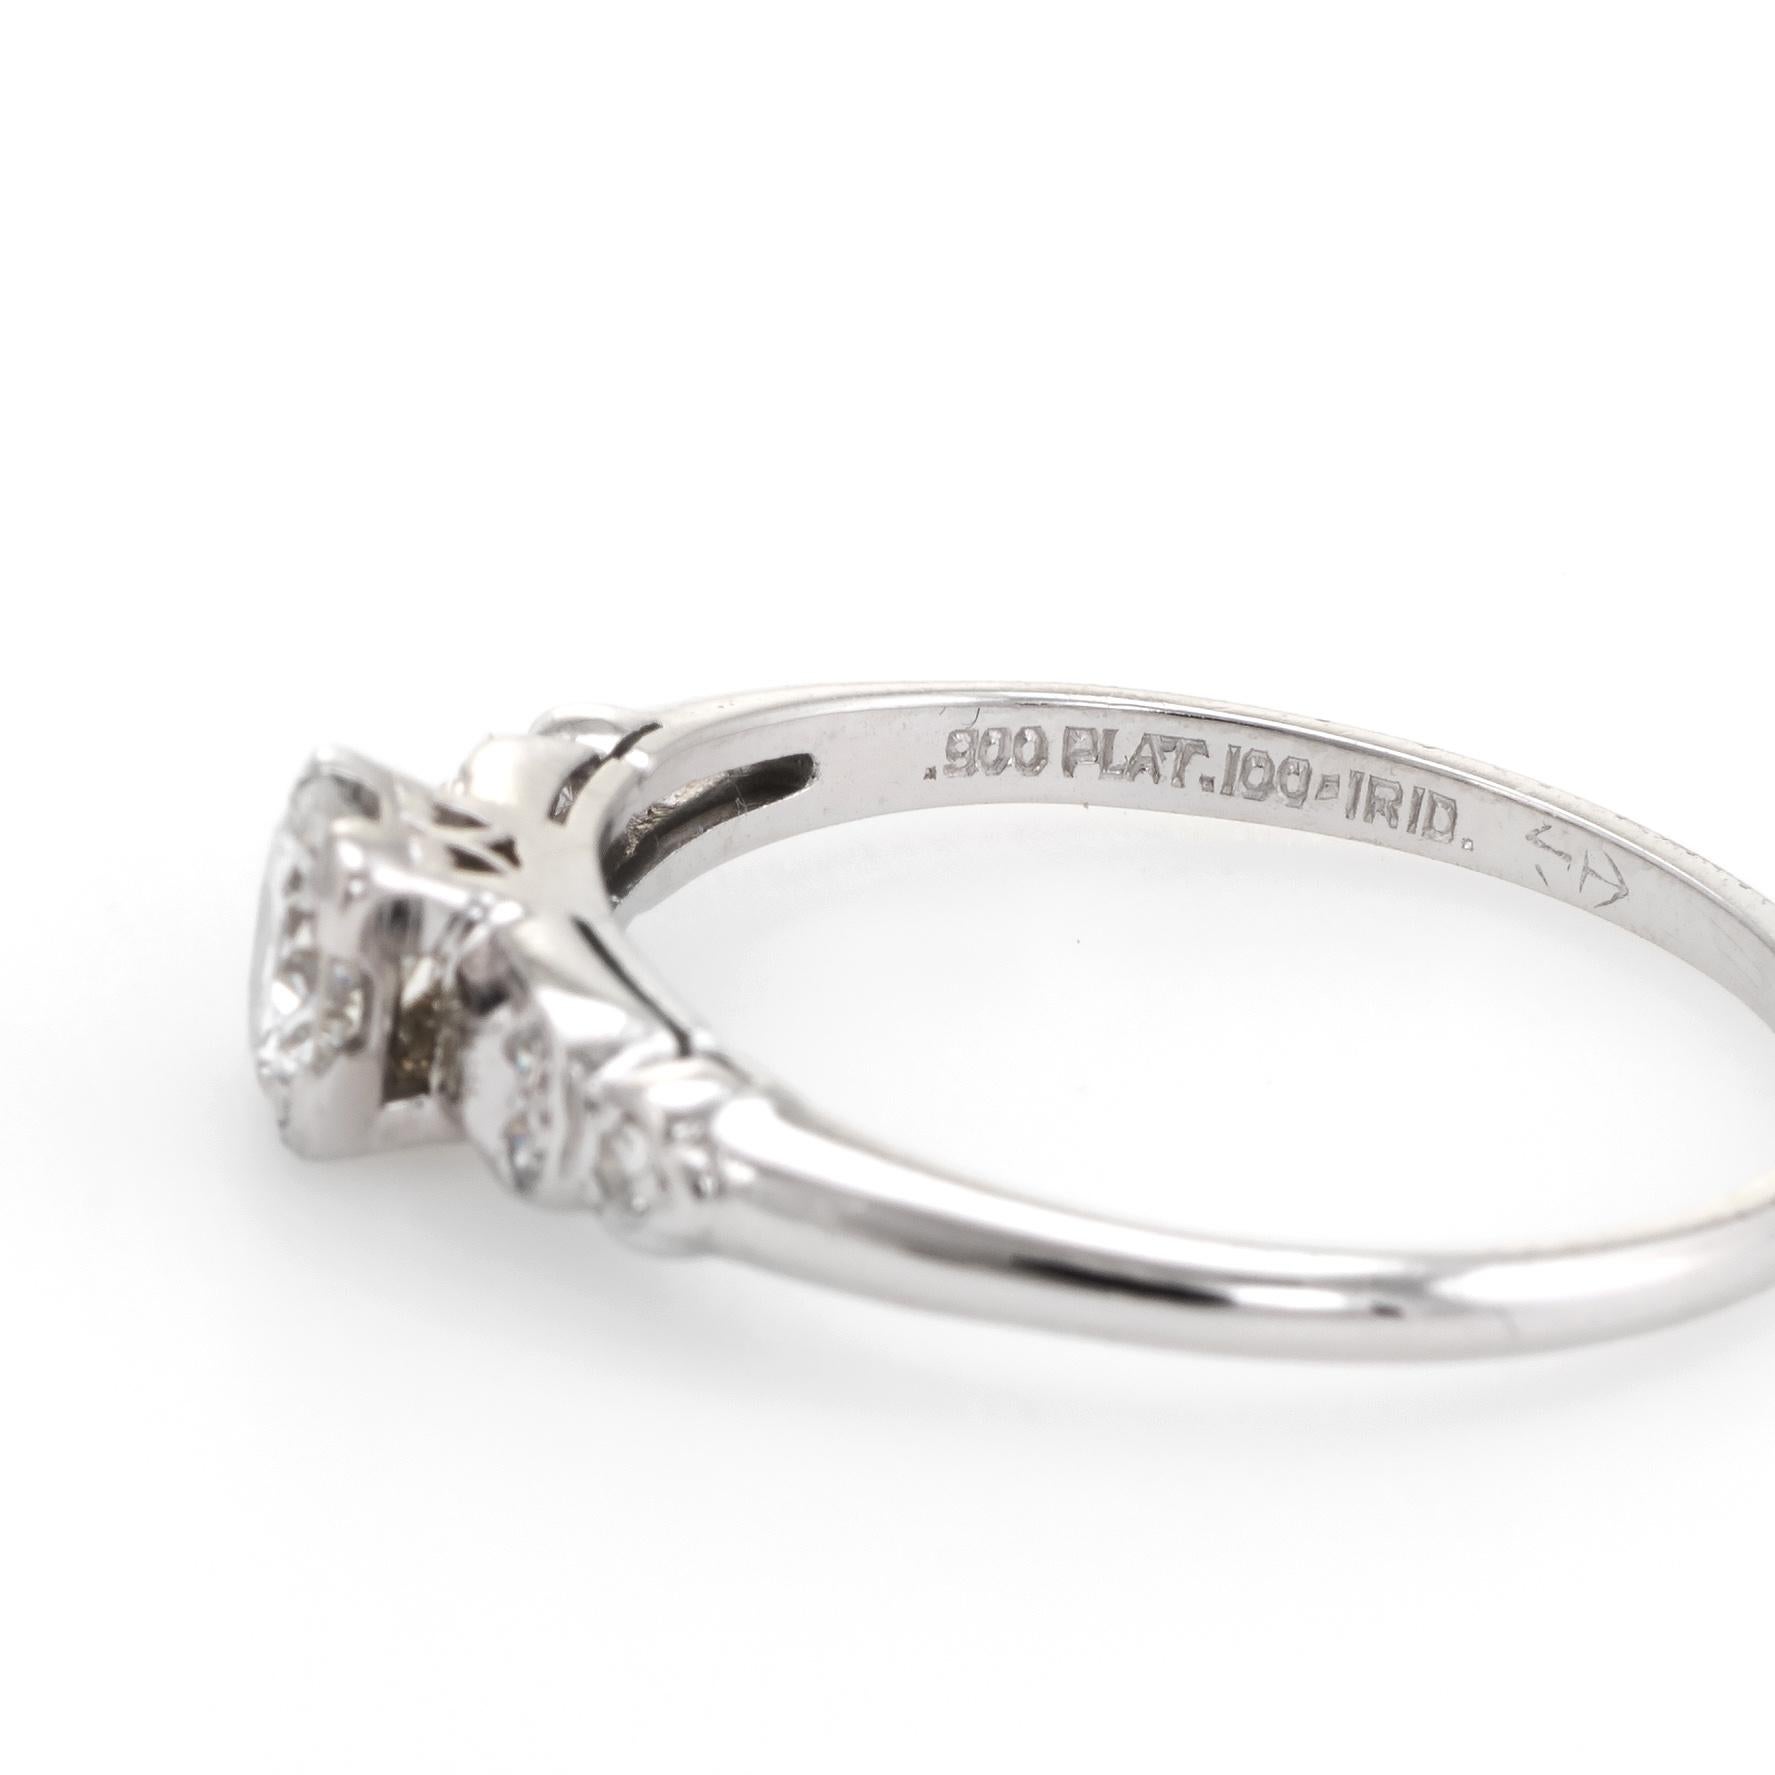 Antique Deco Diamond Engagement Ring Vintage Platinum Estate Fine Jewelry 1